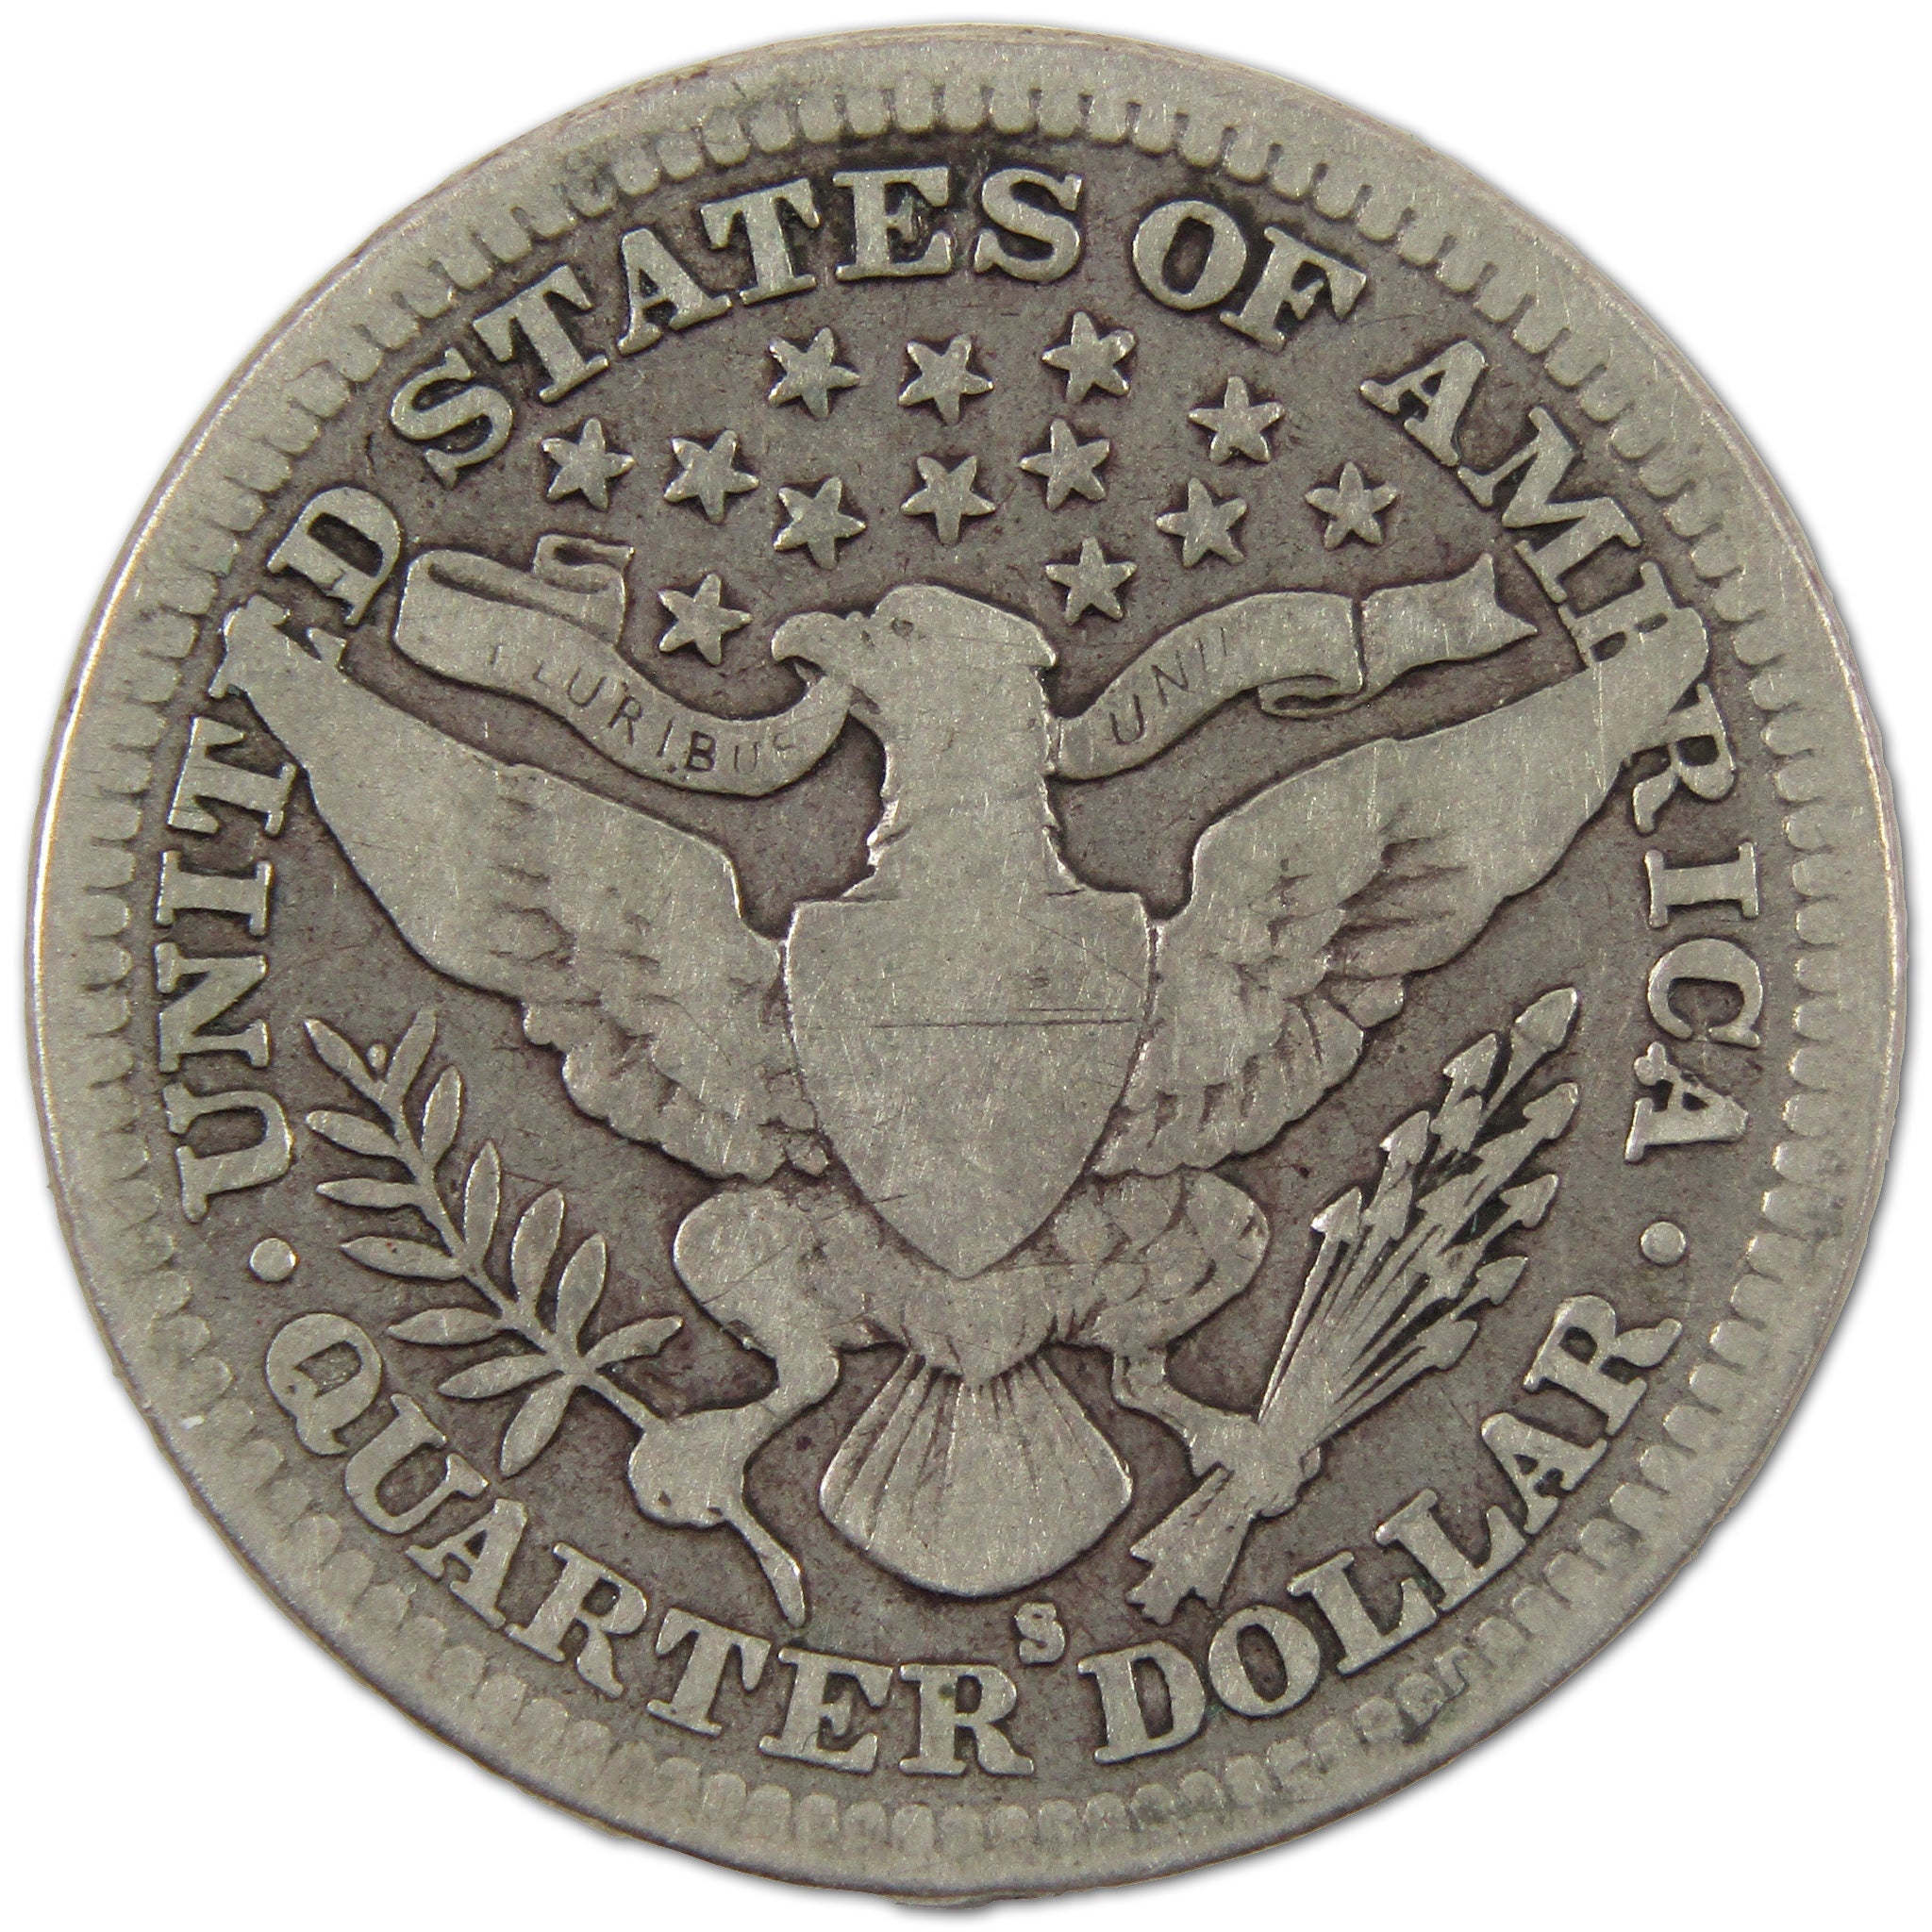 1915 S Barber Quarter VG Very Good Silver 25c Coin SKU:I10566